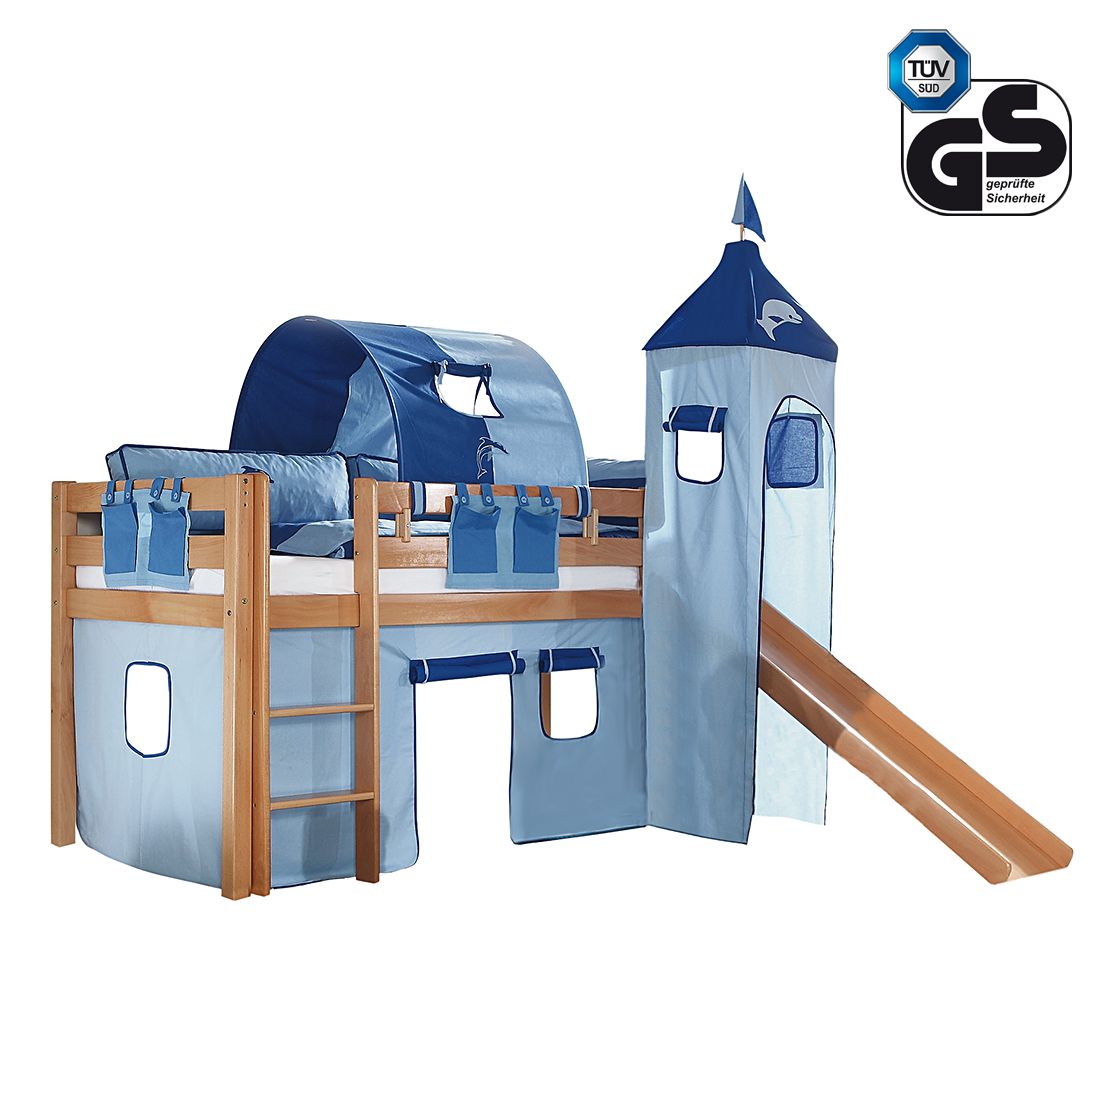 Spielbett Alex - Buche massiv klar lackiert - Inklusive Rutsche, Turm & Textilset in Blau mit Delfin, Relita